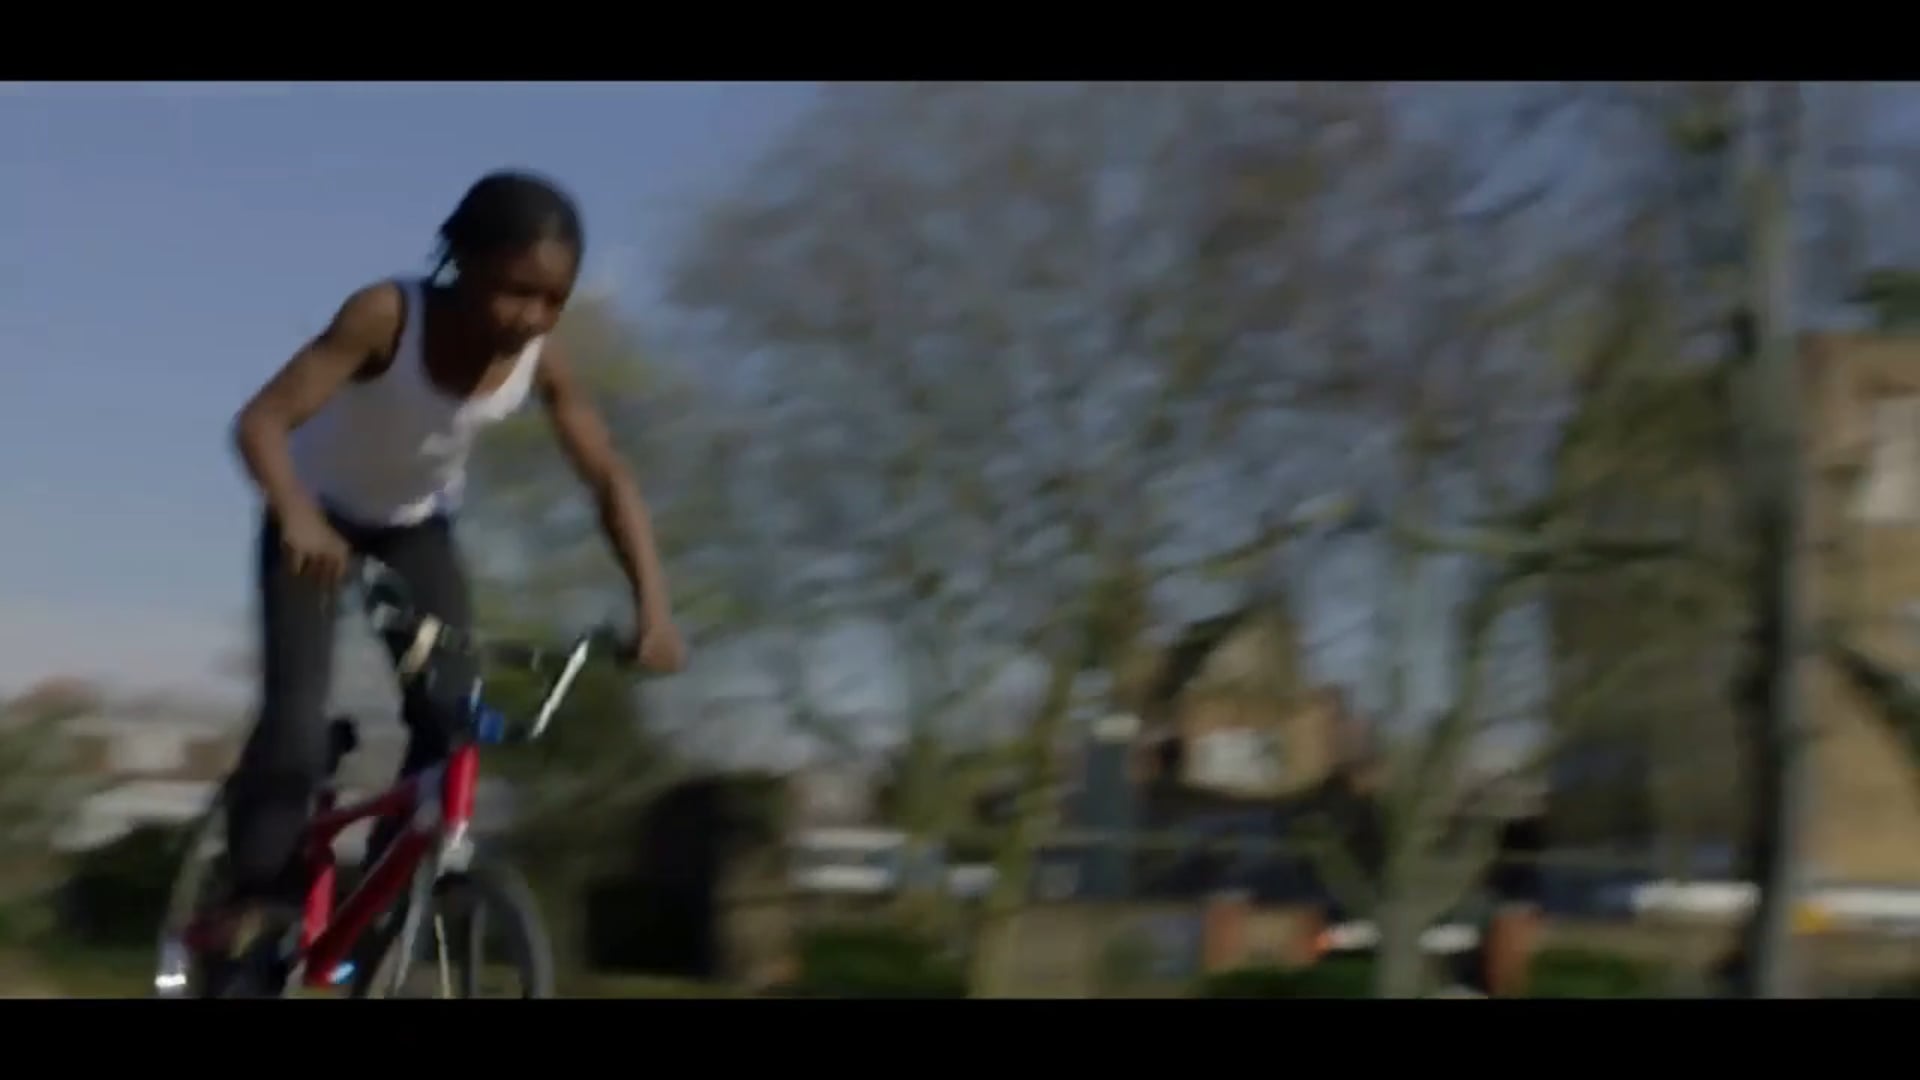 Documentary - ‘Peckham BMX’ - entry